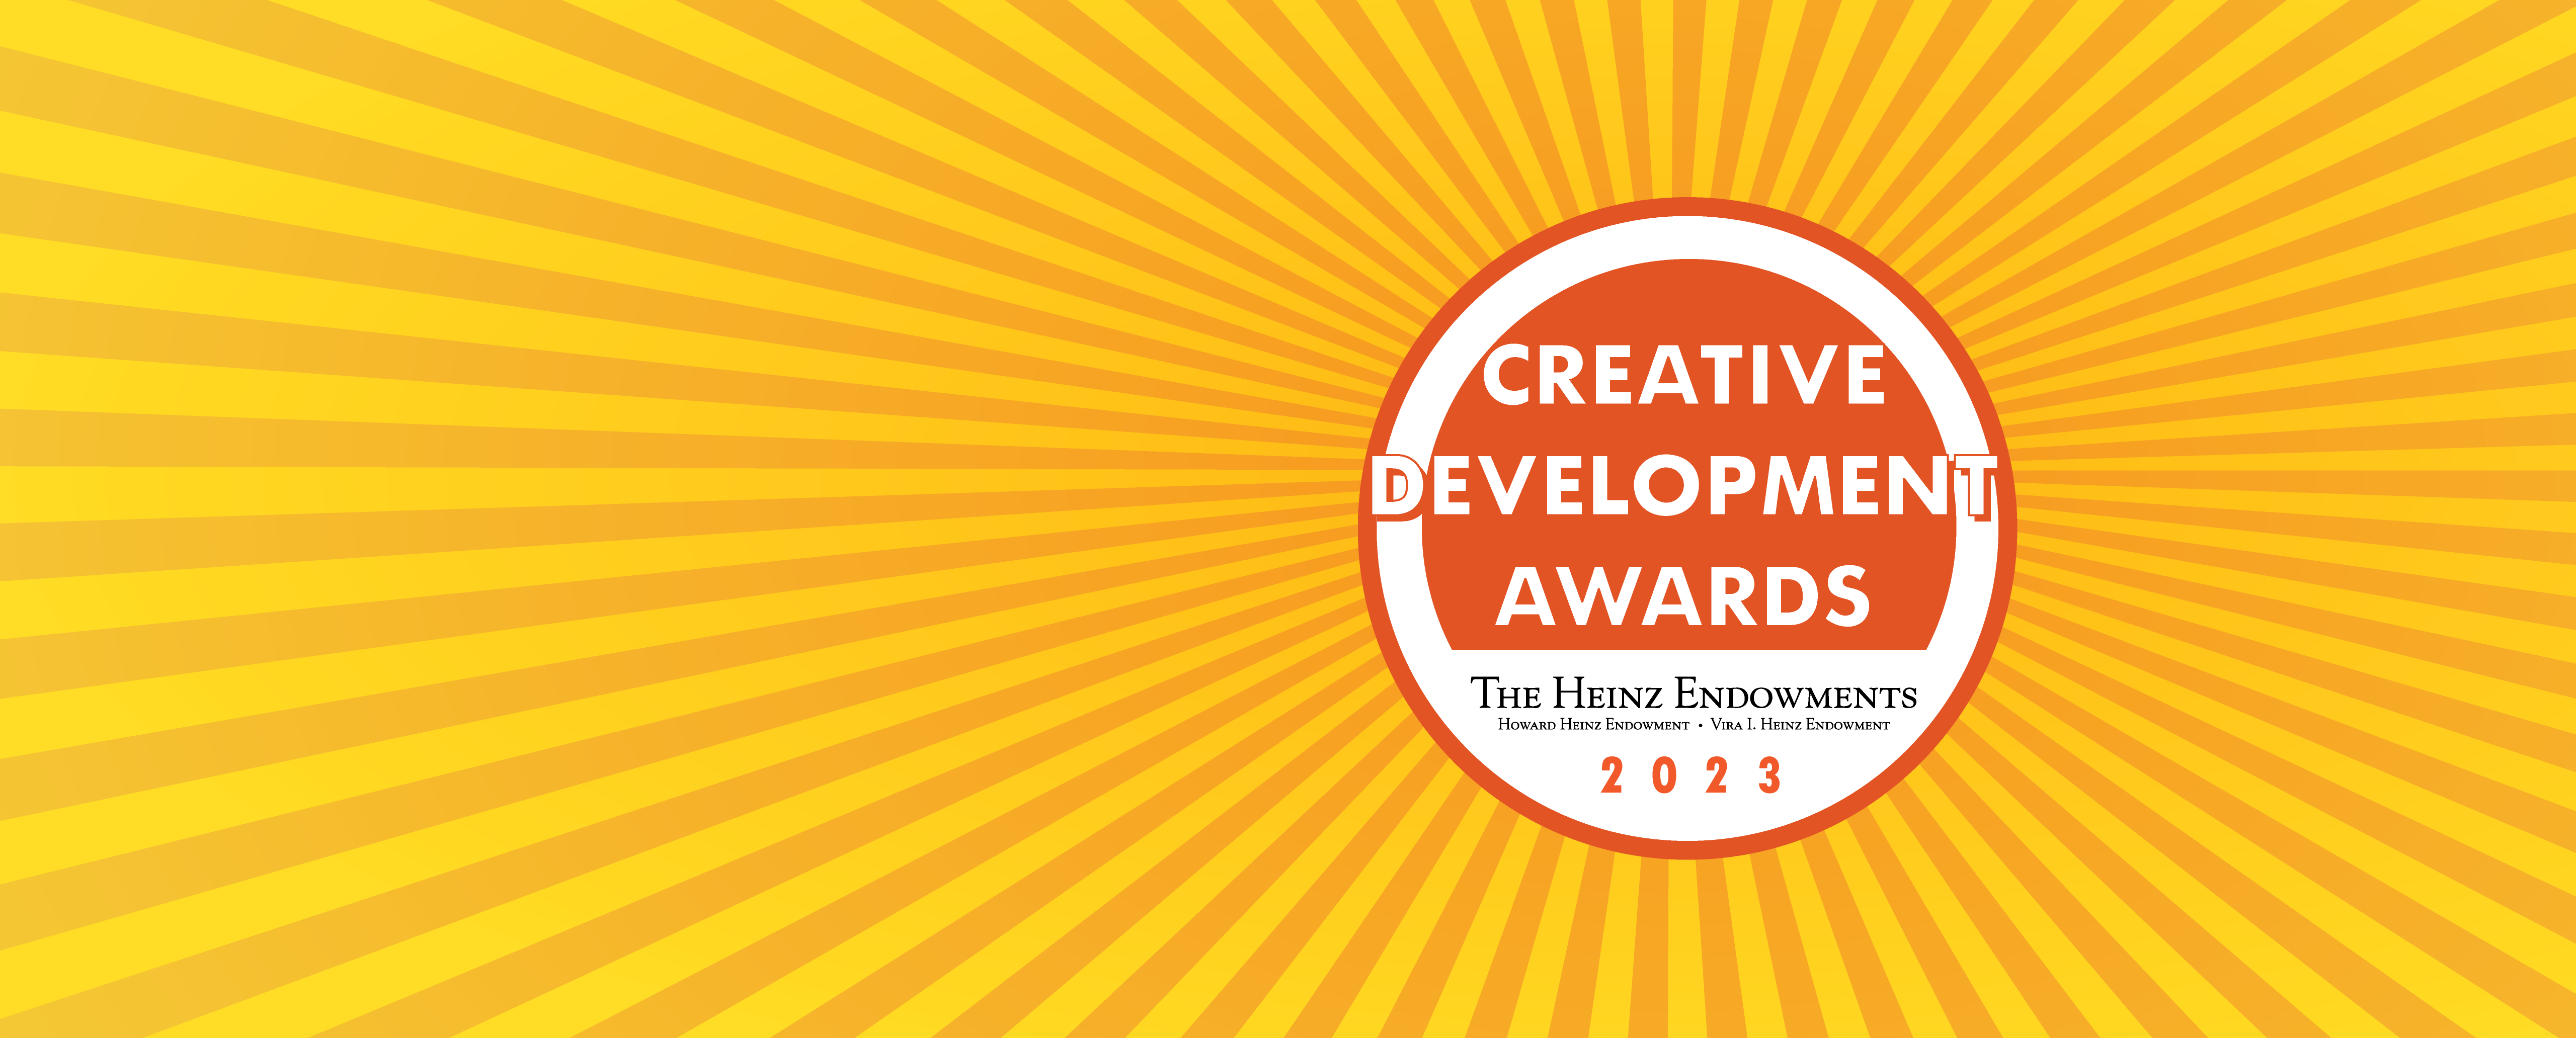 Creative Development Awards logo